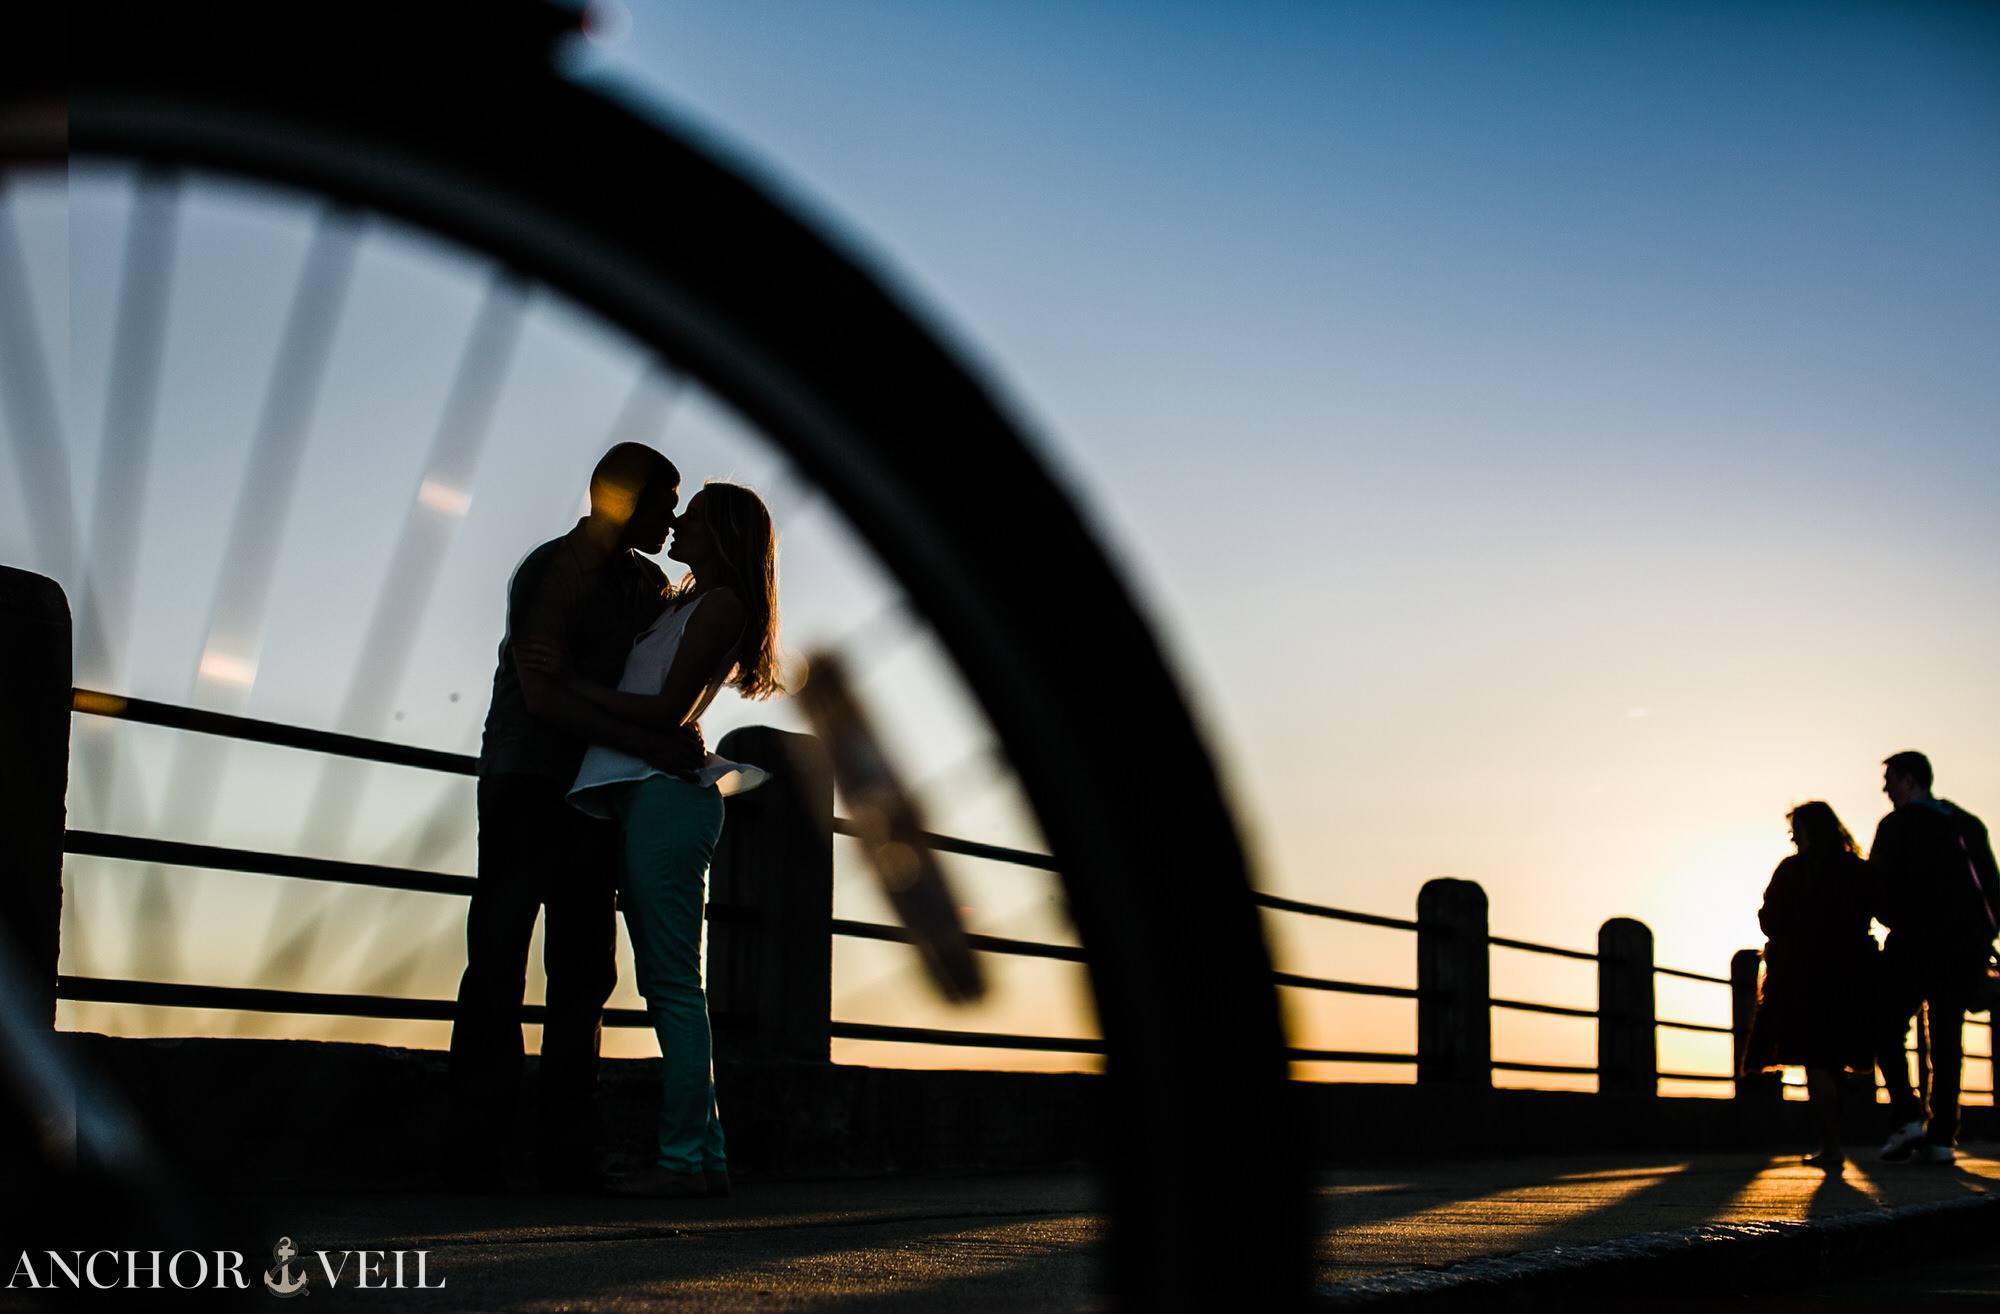 shooting the silhouette through the bike wheel while the couple kiss